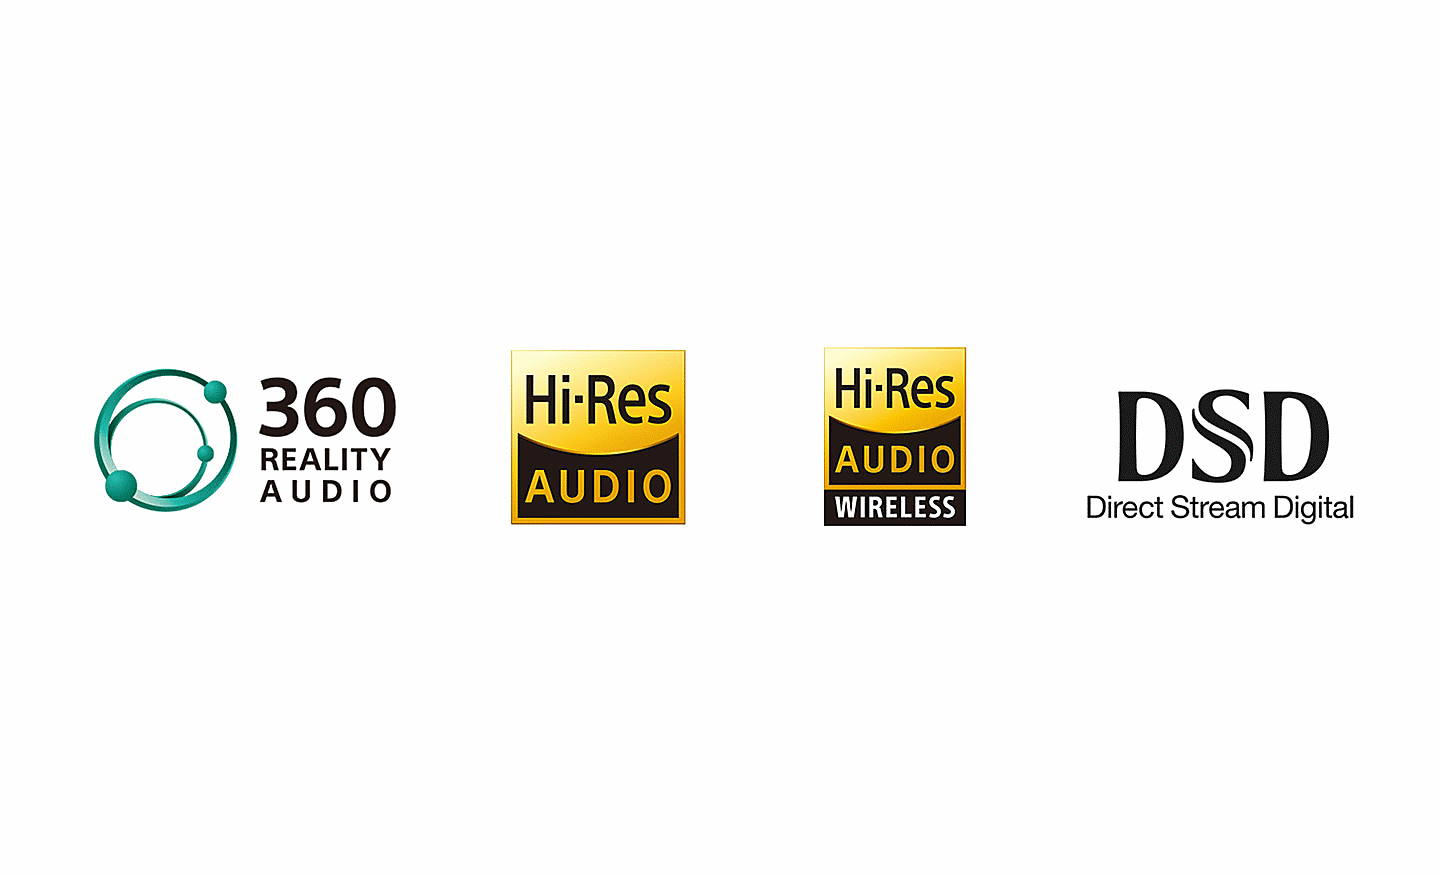 Logotip 360 Reality Audio, logotip Hi-Res Audio, logotip Hi-Res Audio Wireless, logotip DSD (Direct Stream Digital)